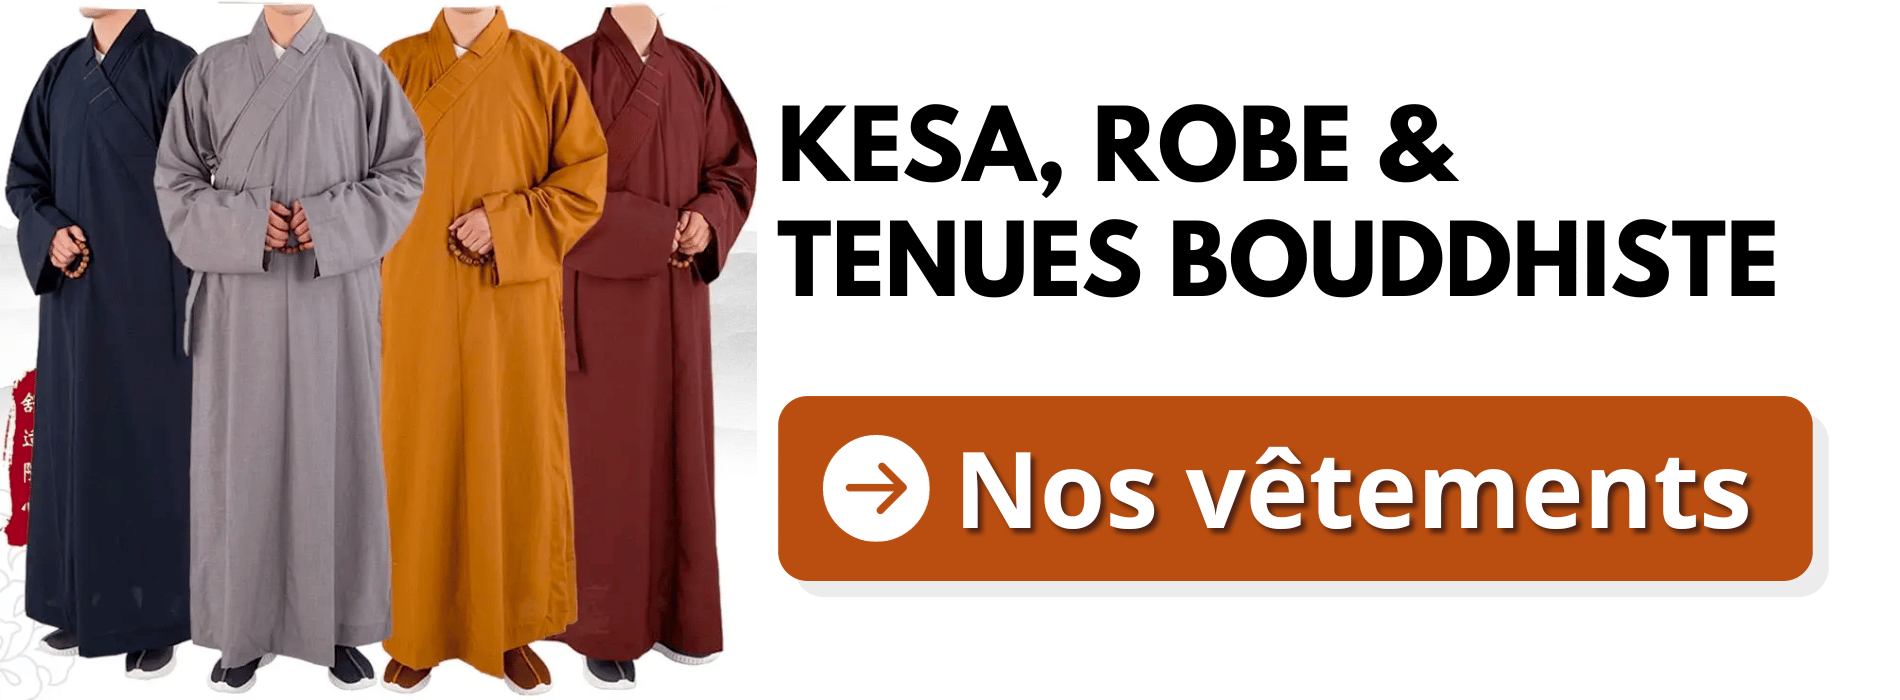 Kesa-Robe-Outfits-Buddhist